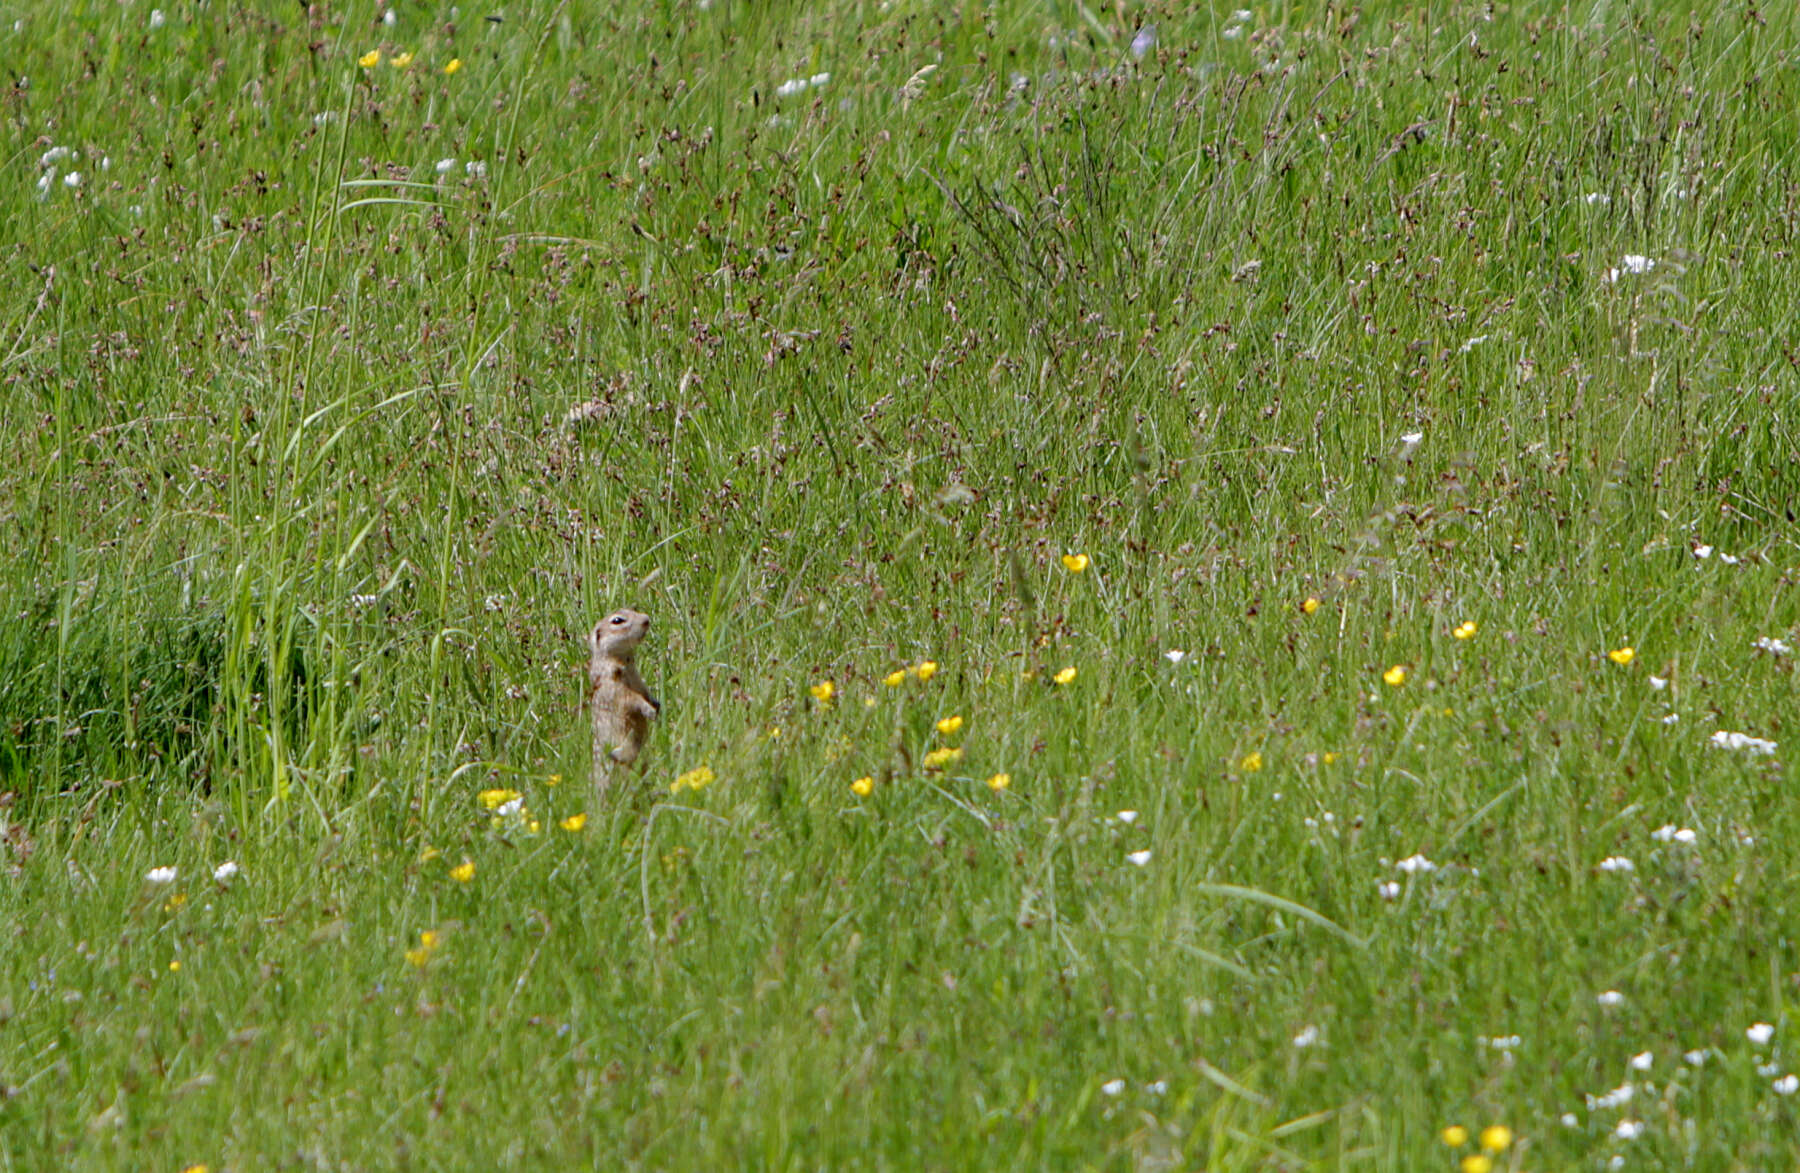 Image of Speckled Ground Squirrel